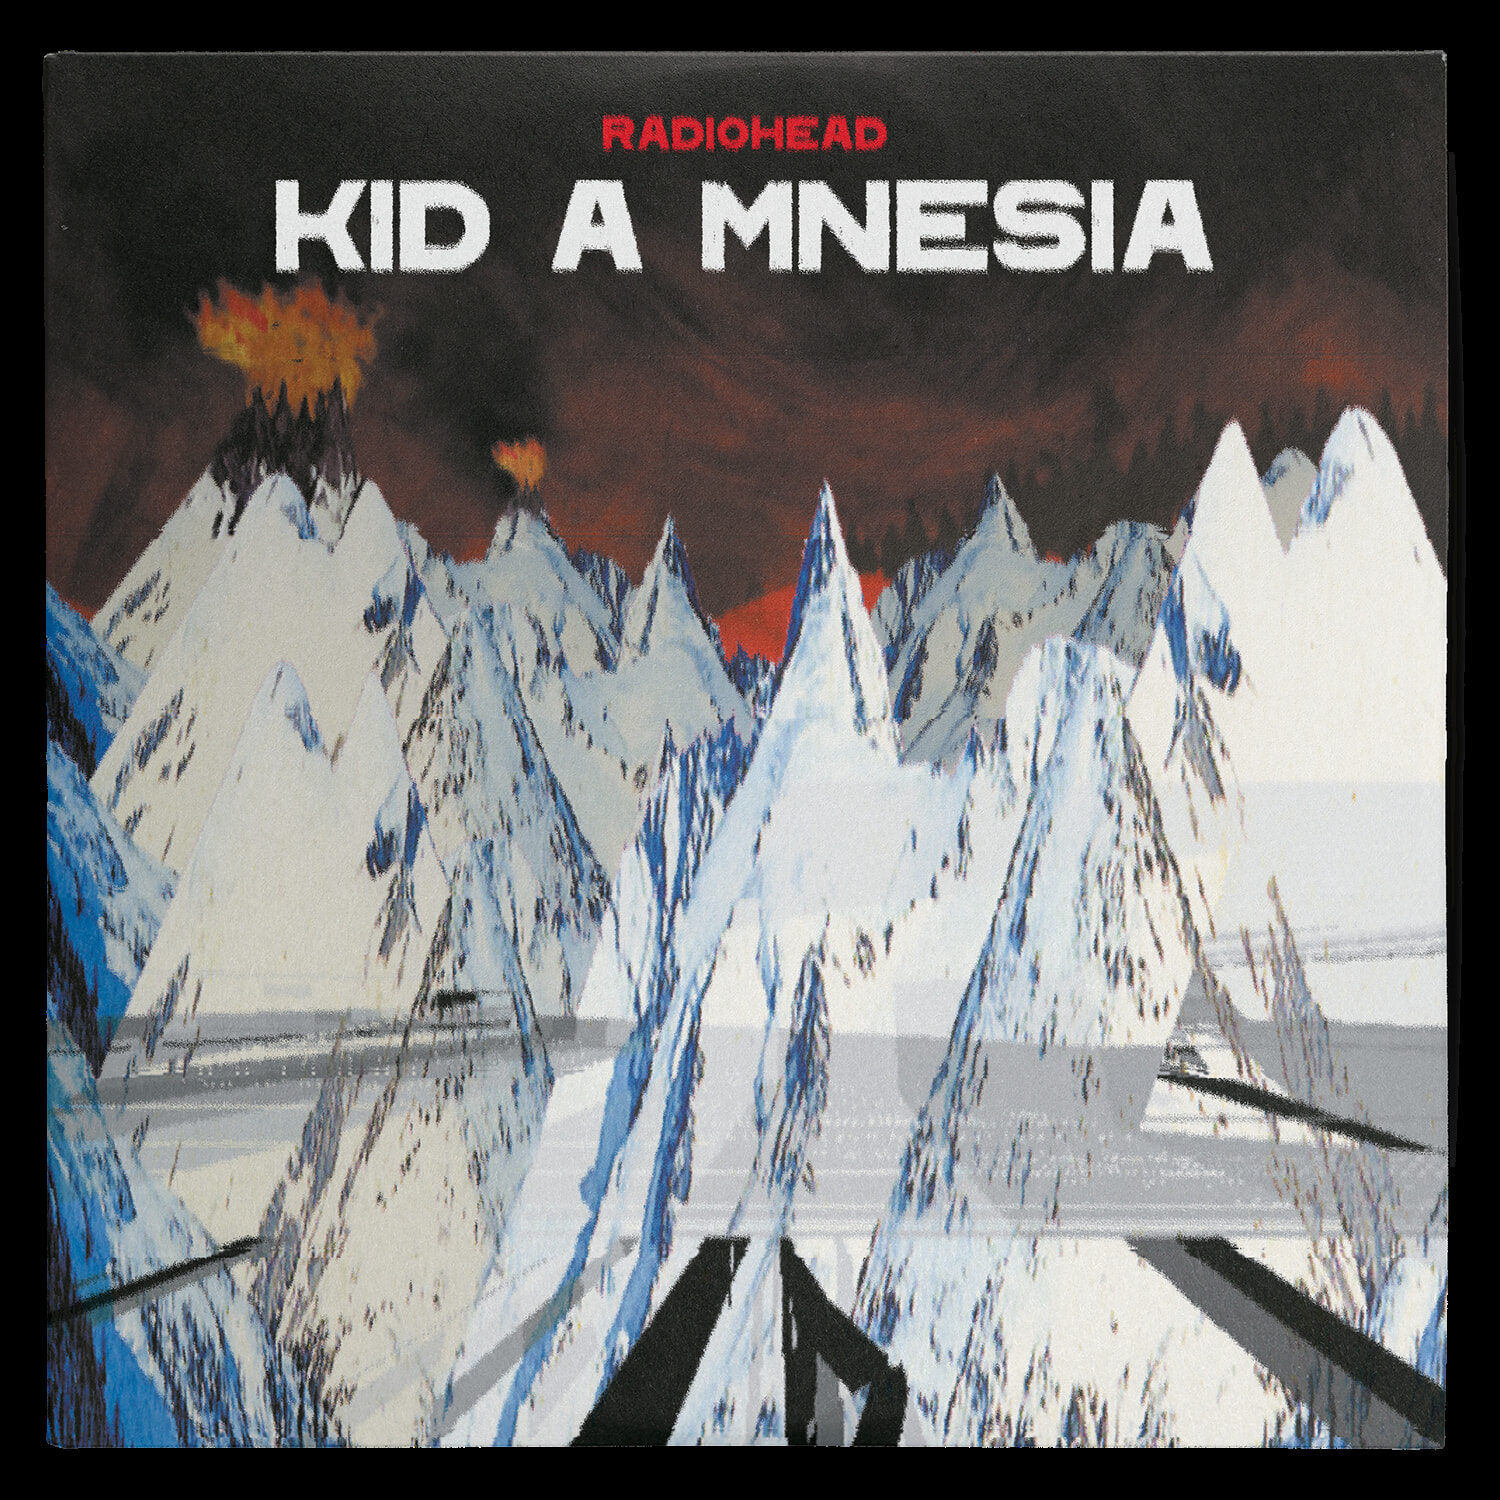 Radiohead (라디오헤드) - KID A MNESIA